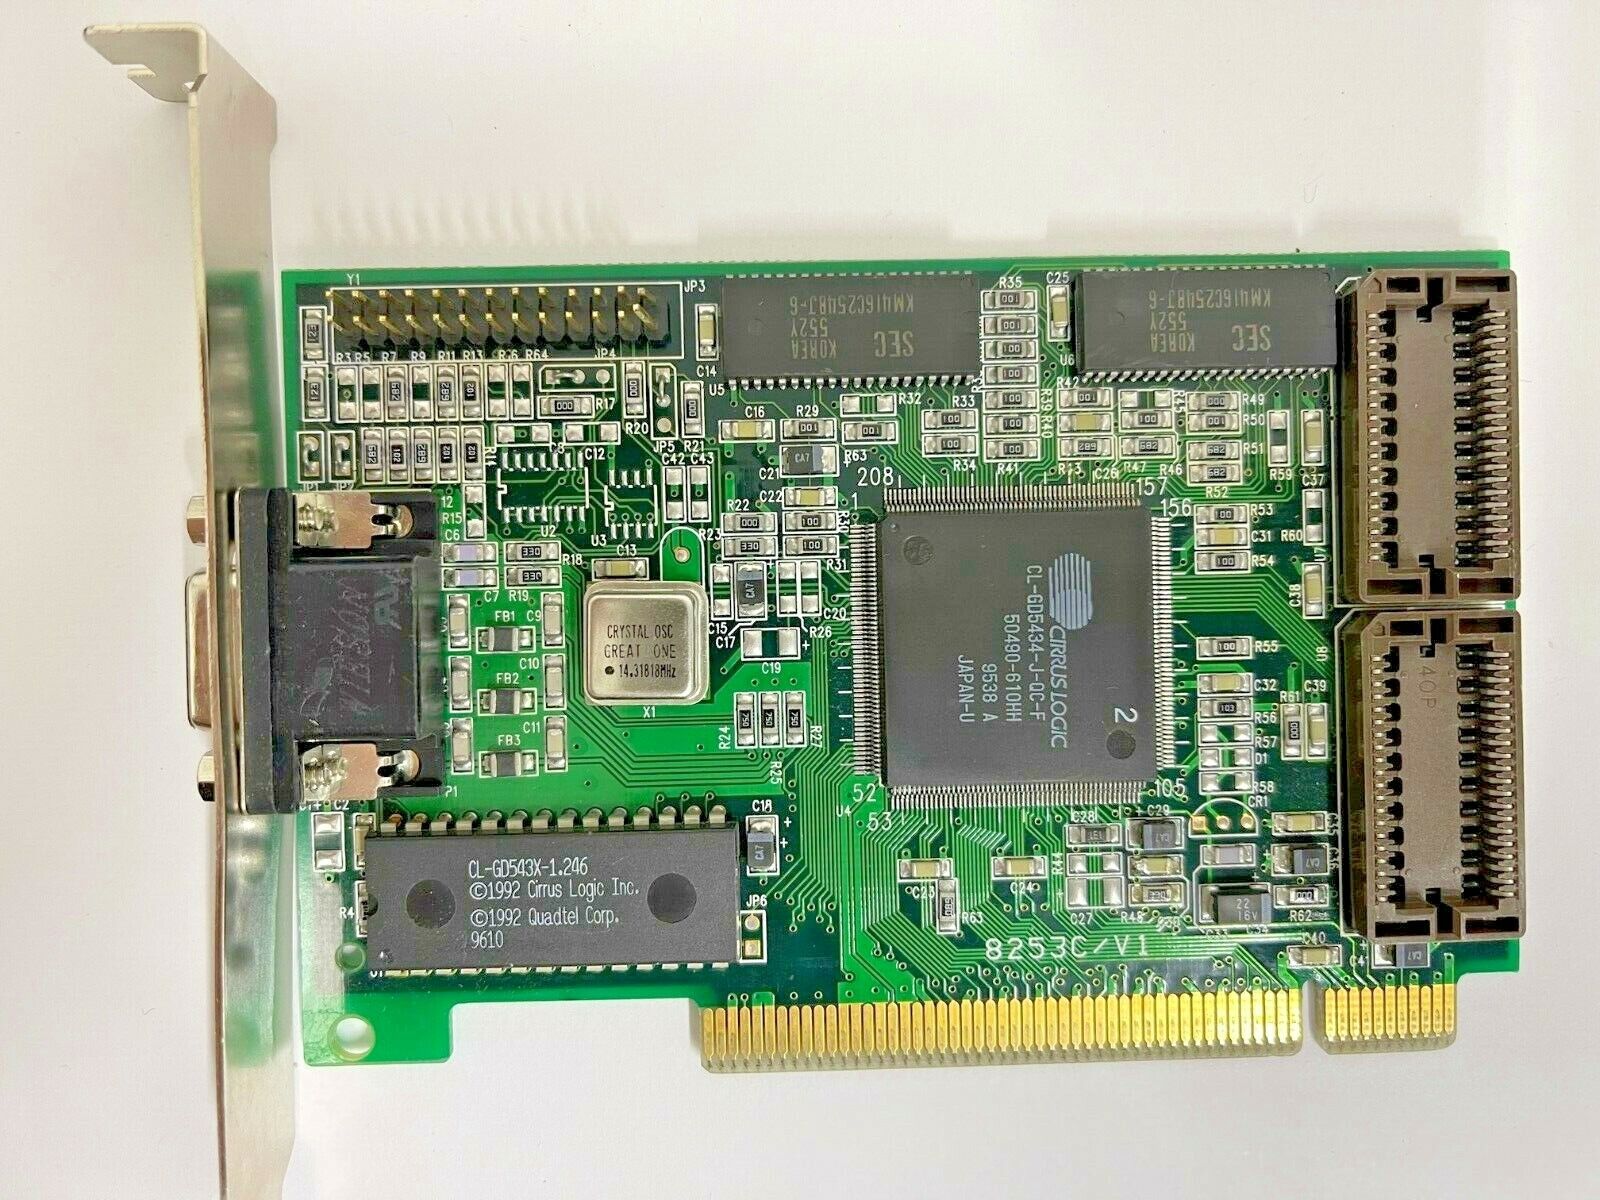 RARE VINTAGE CIRRUS LOGIC 8253C/V1 CL-GD5434-J-QC-F CHIP 512K PCI VGA CARD MXB37